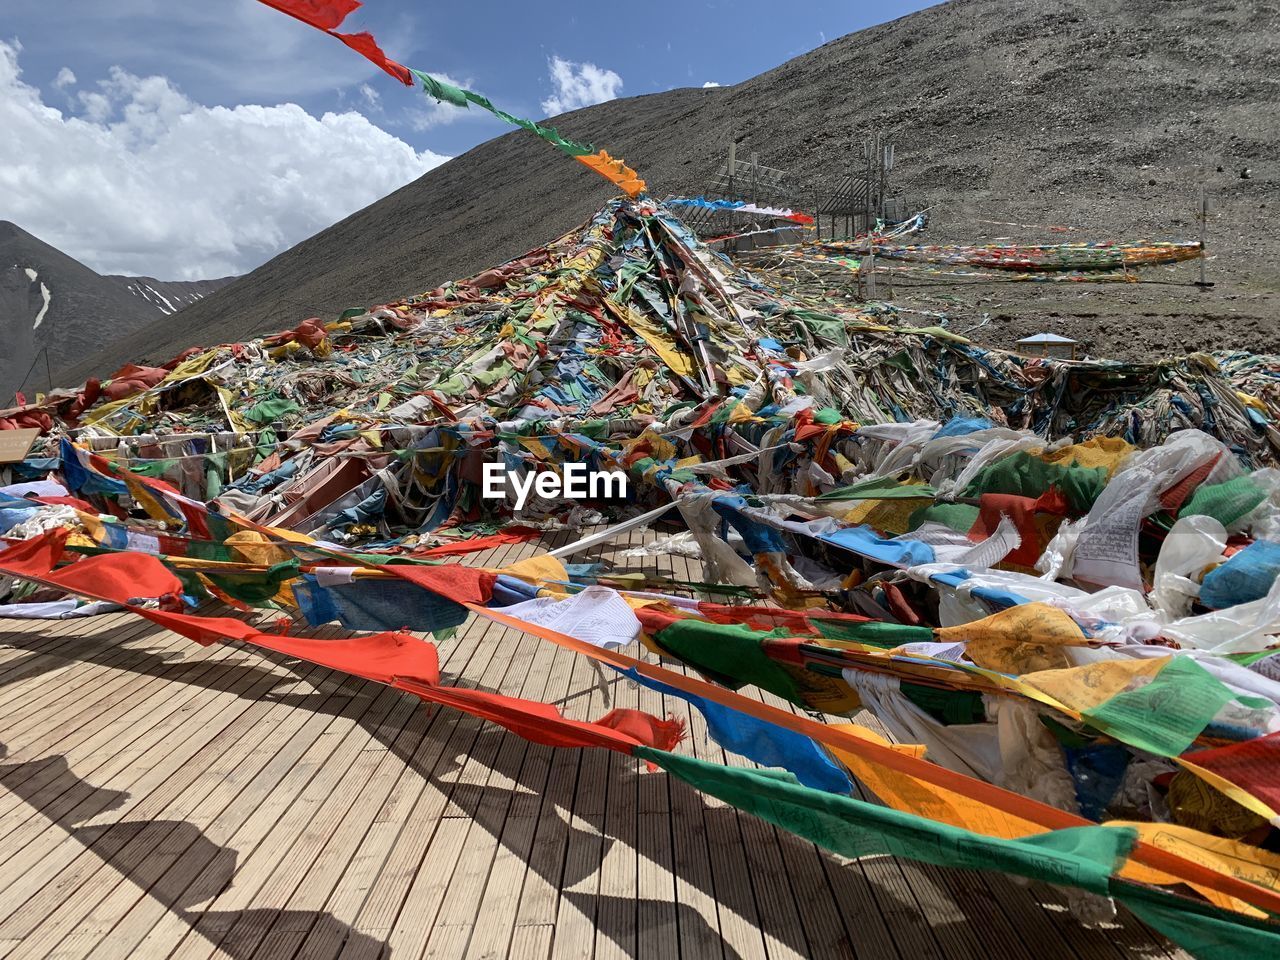 Tibetan preyer flags in nyenchen tanglha mountains